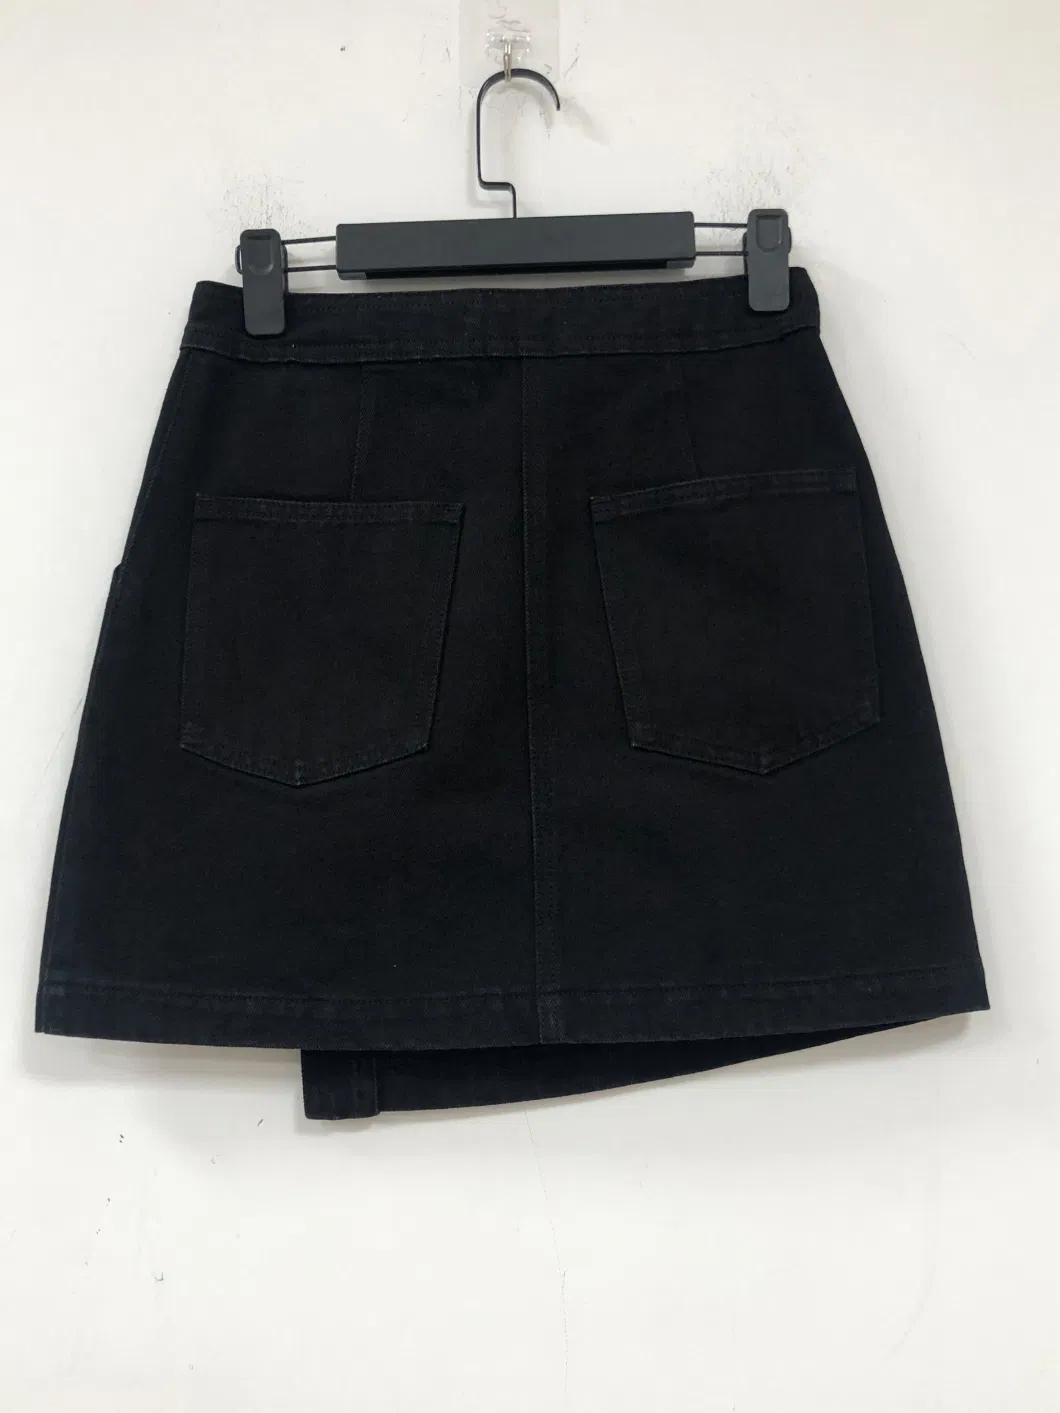 Non-Stretch Quality Women Black Denim Miniskirts